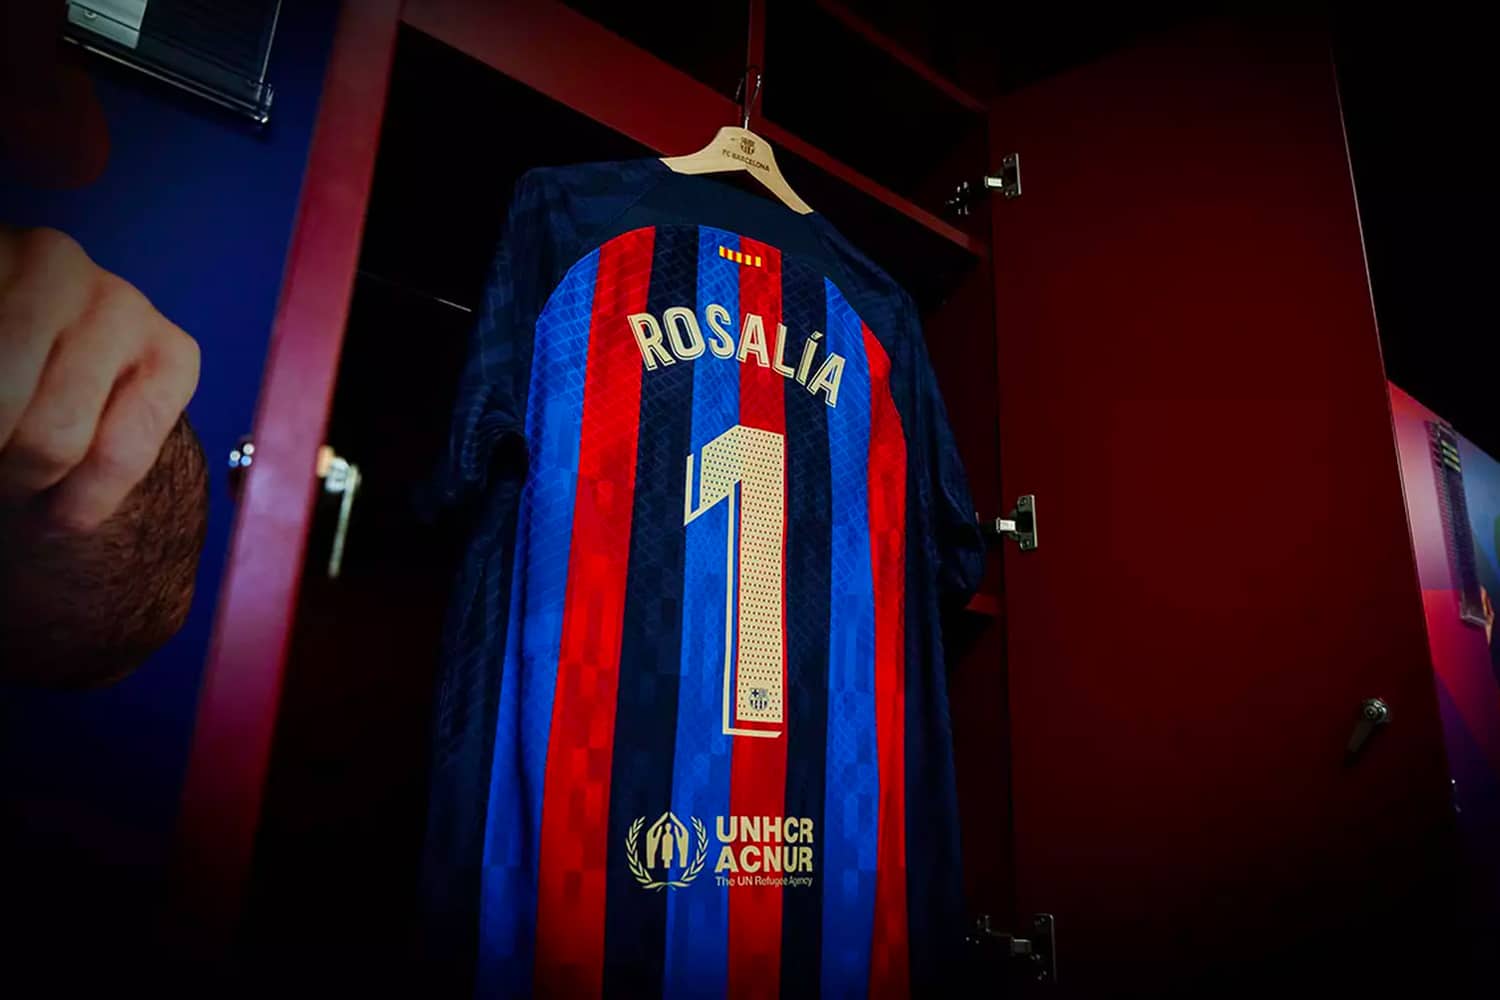 Rosalía FC Barcellona Clasico shirt limited edition